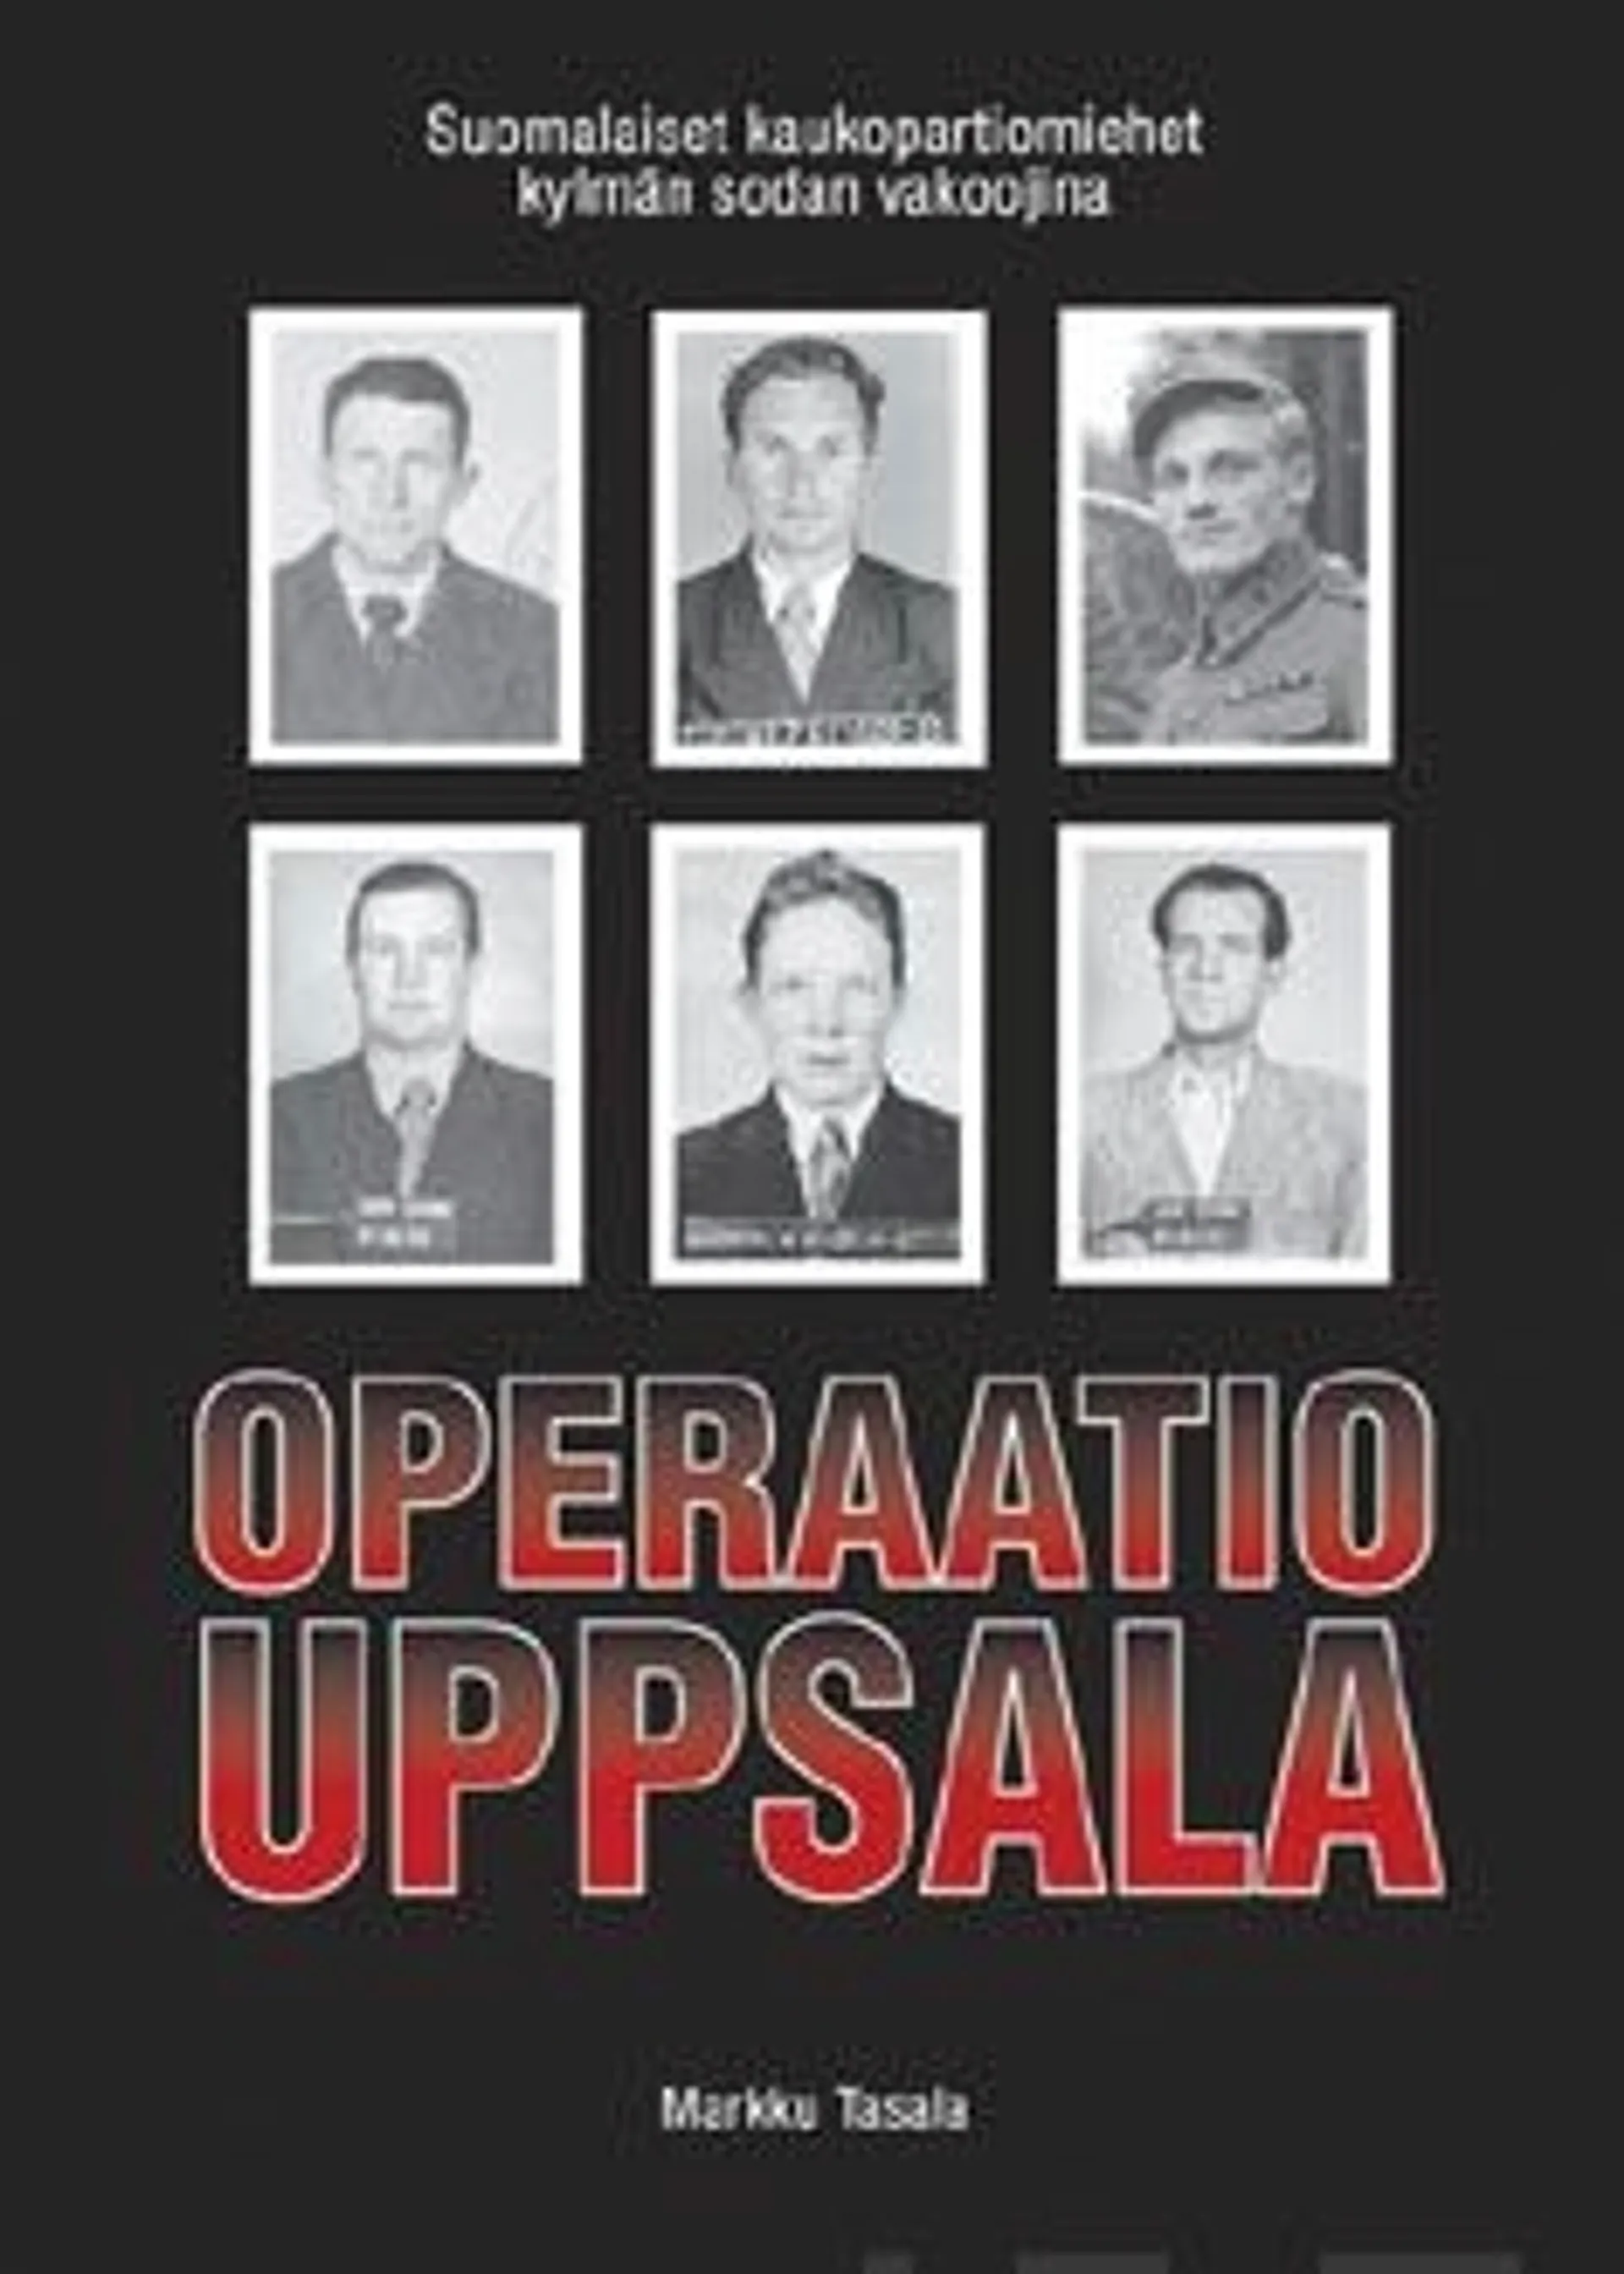 Tasala, Operaatio Uppsala